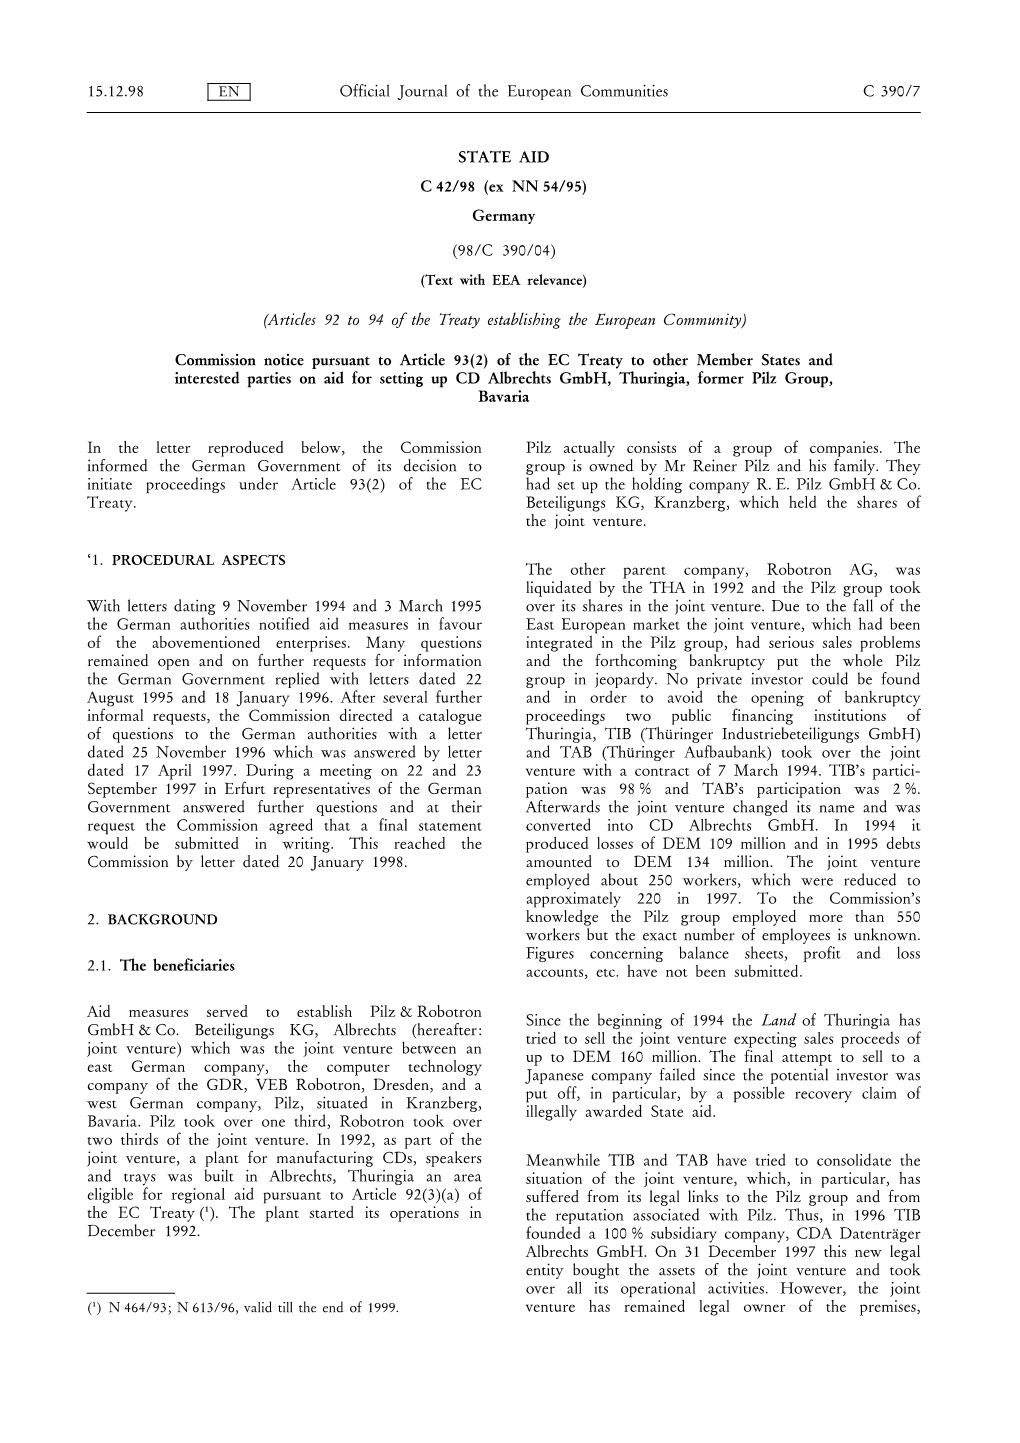 (98/C 390/04) (Articles 92 to 94 of the Treaty Establishing the European